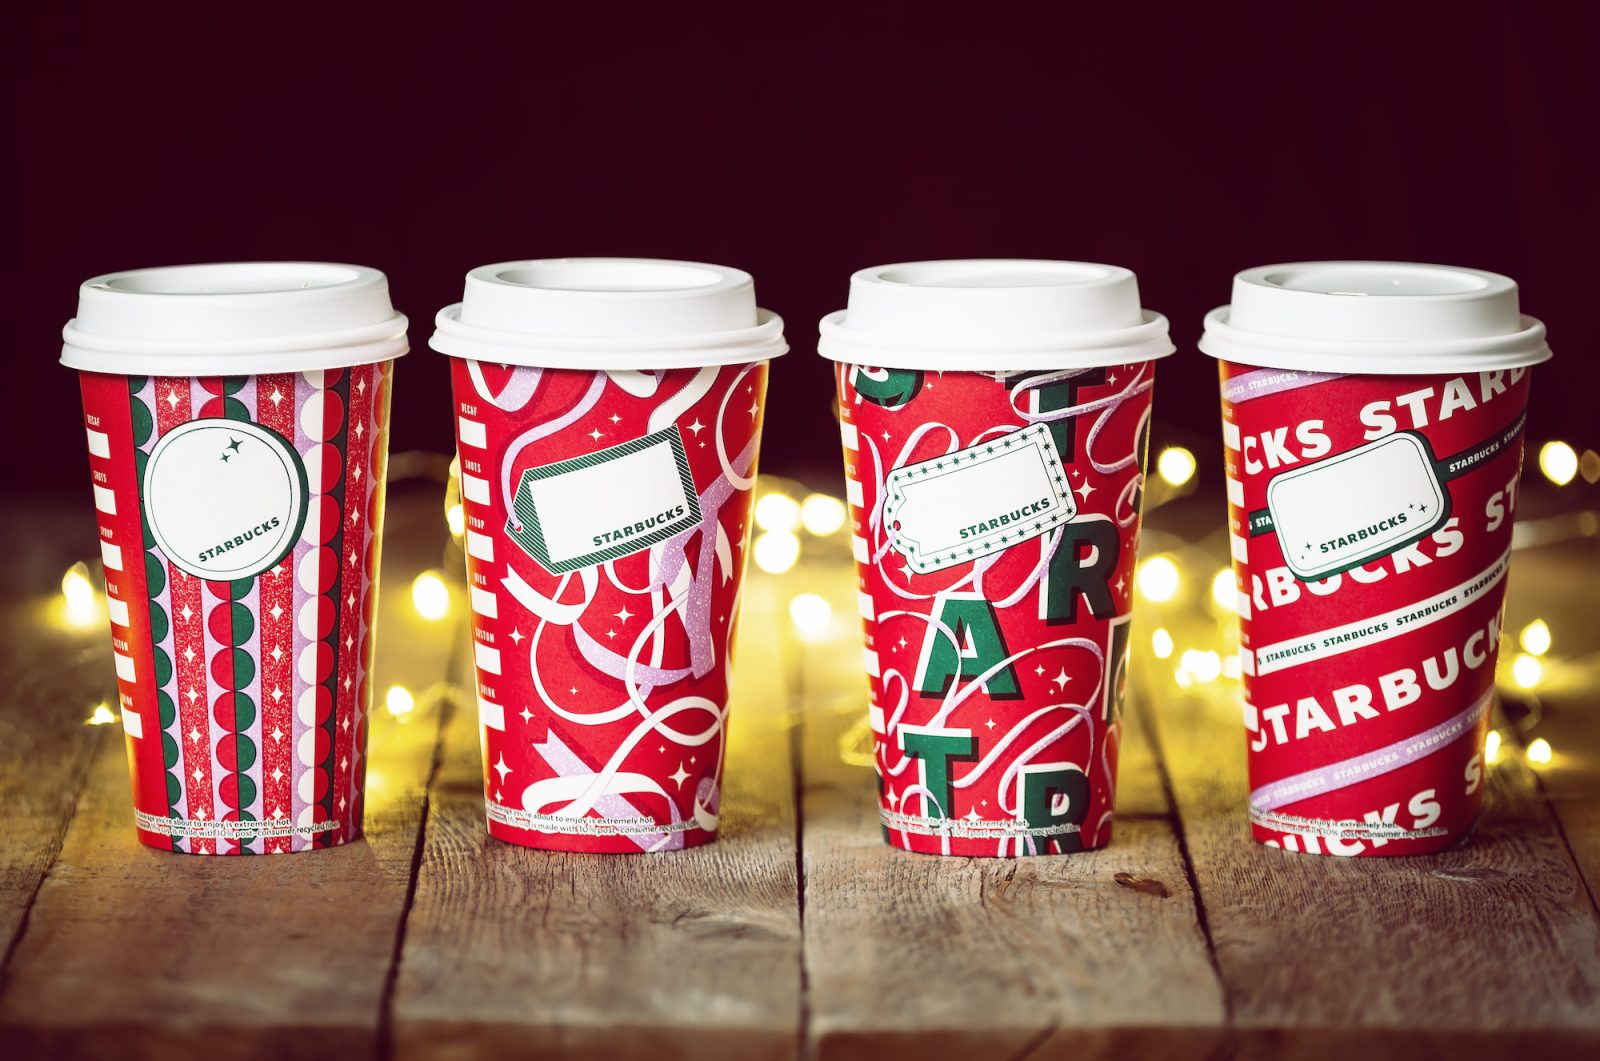 https://www.bestcoffeerecipes.com/wp-content/uploads/2022/09/starbucks-holiday-cups-2022.jpg